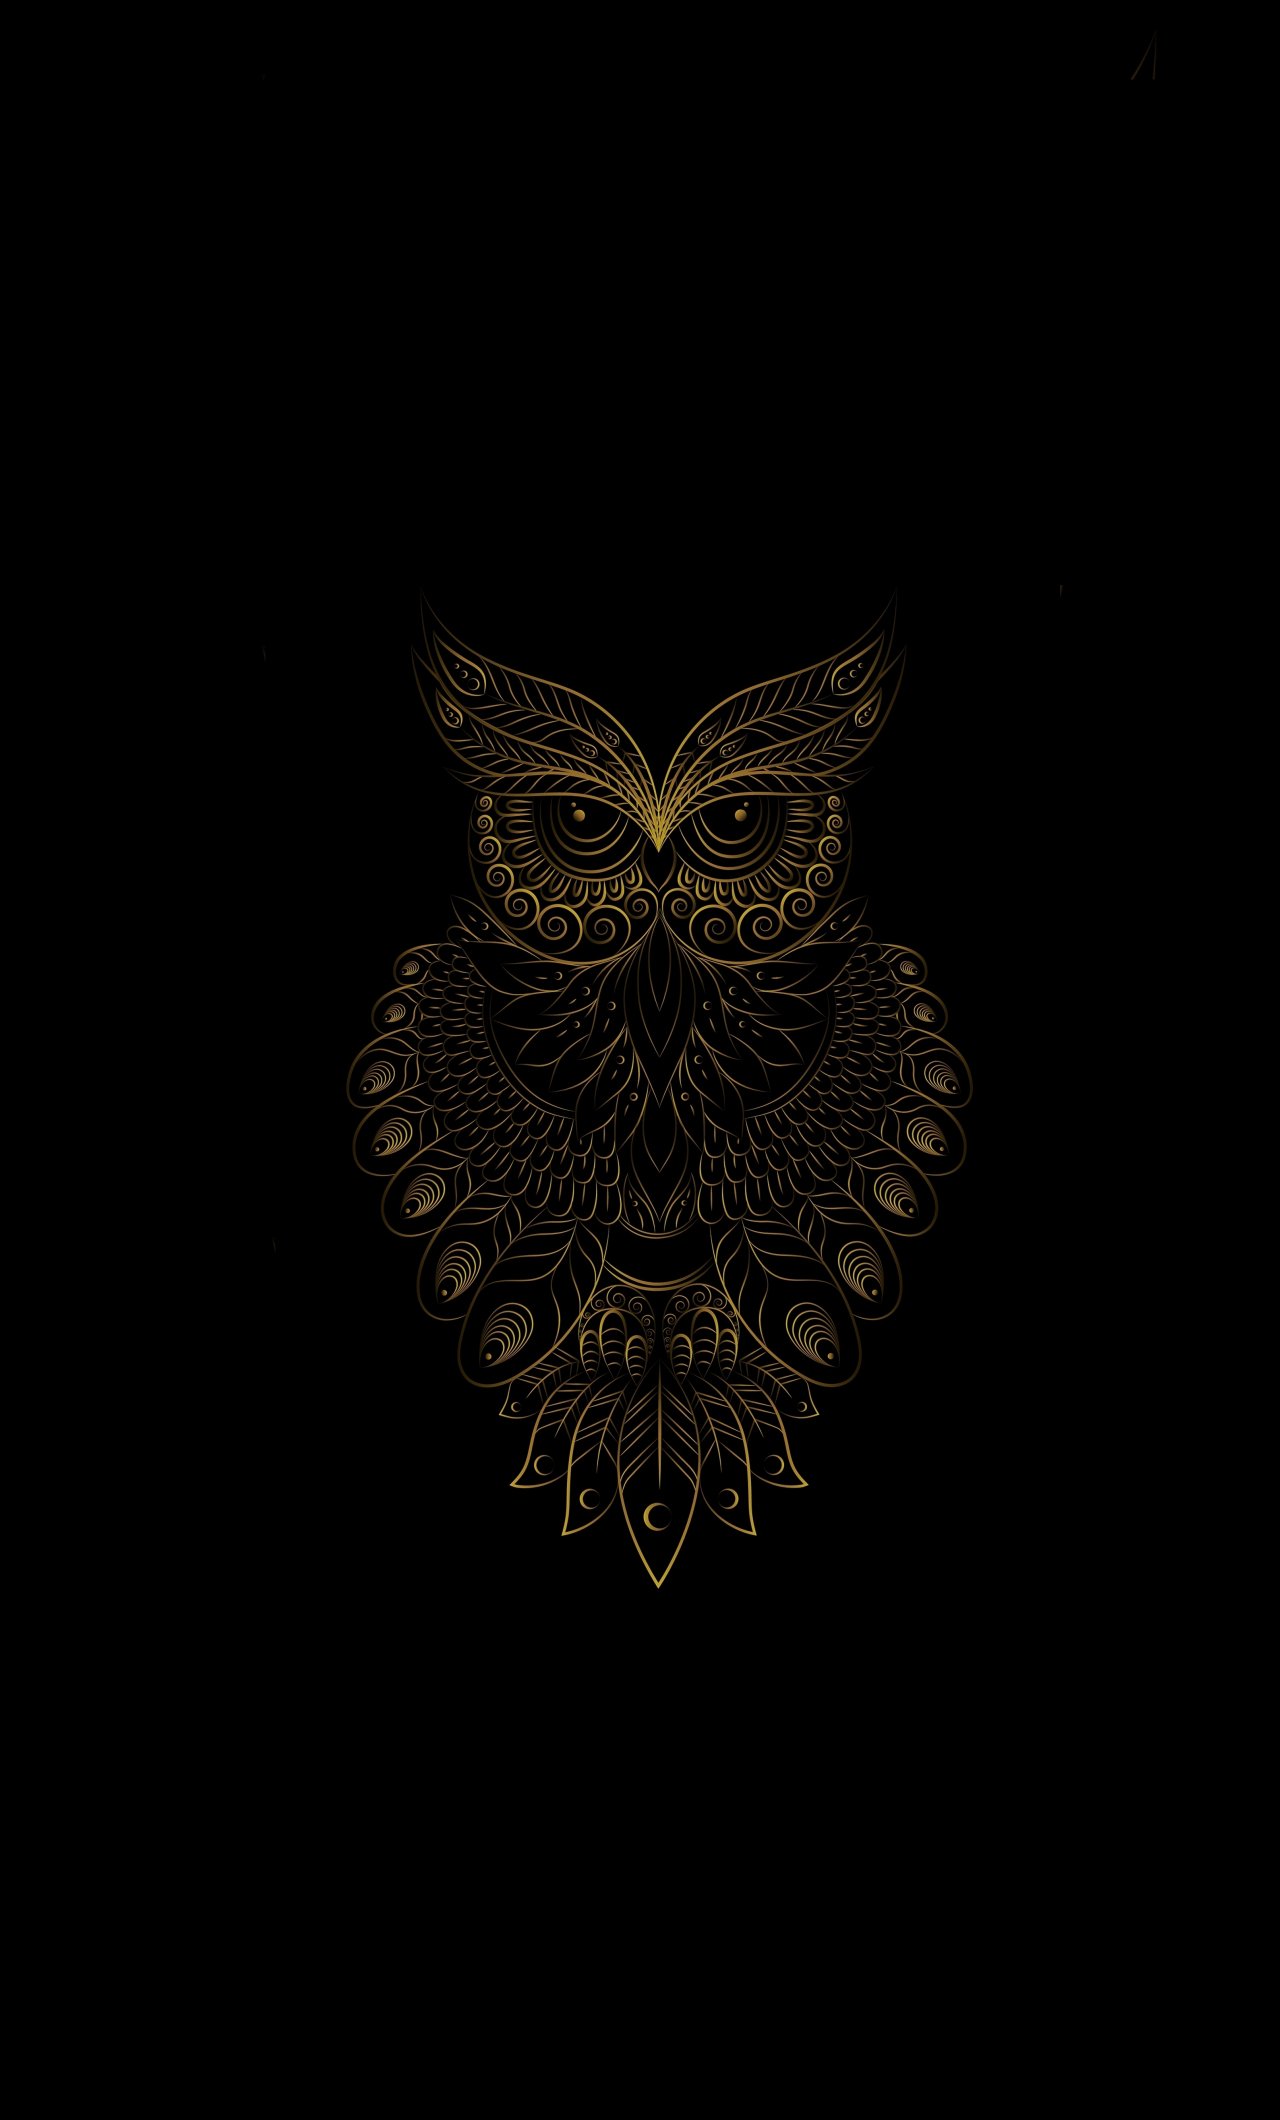 Download 1280x2120 wallpaper golden owl bird, pattern, art, iphone 6 plus, 1280x2120 HD image, background, 24659